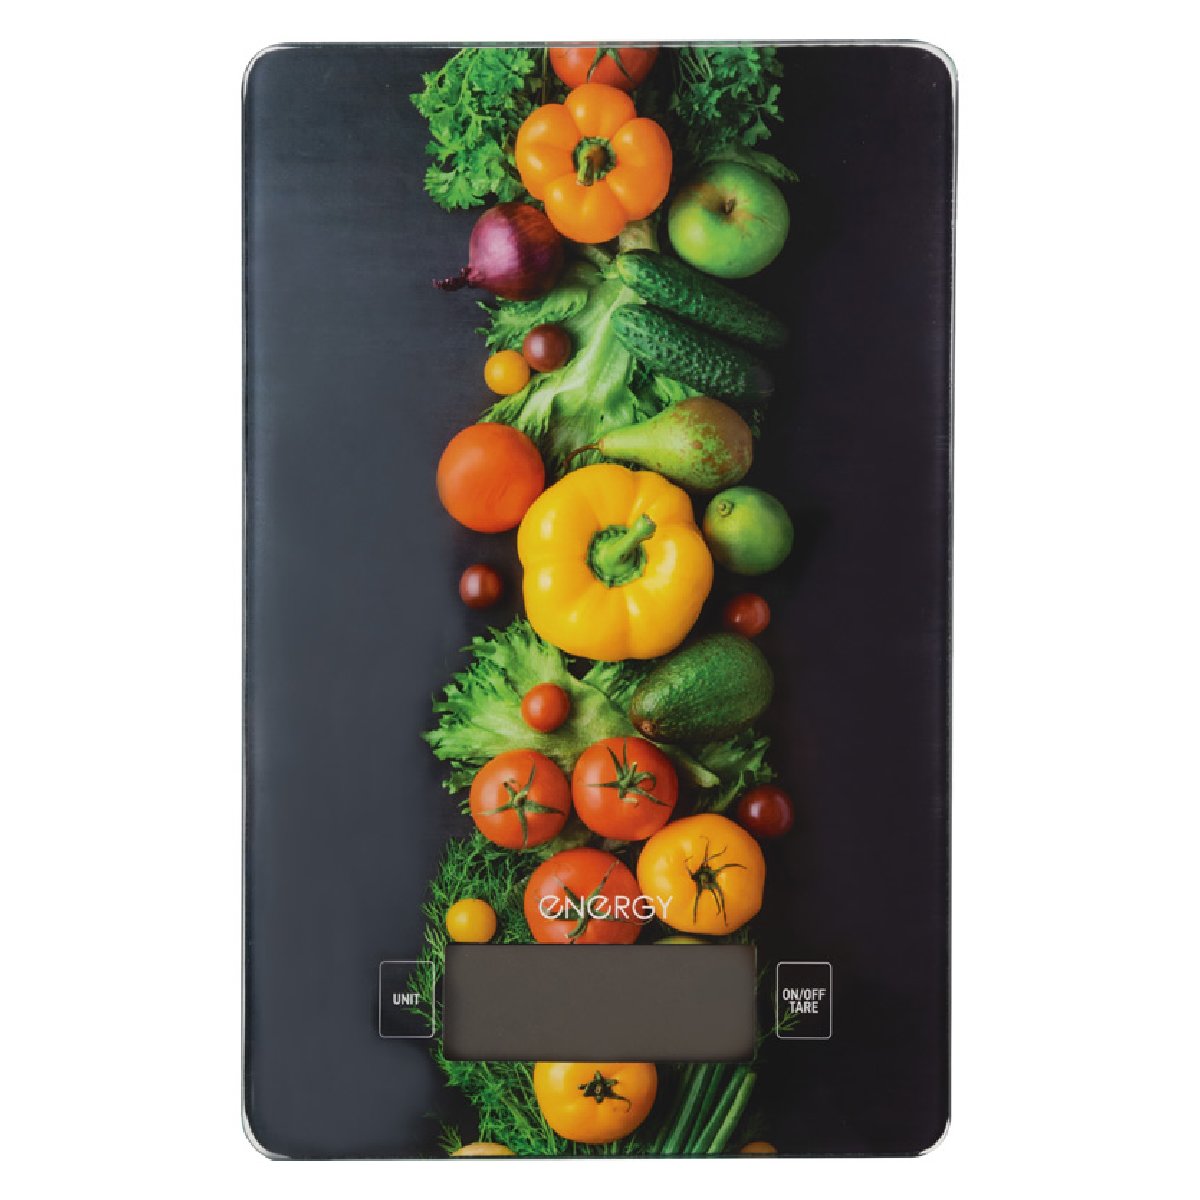 Весы кухонные электронные ENERGY EN-423 Овощи (101230)